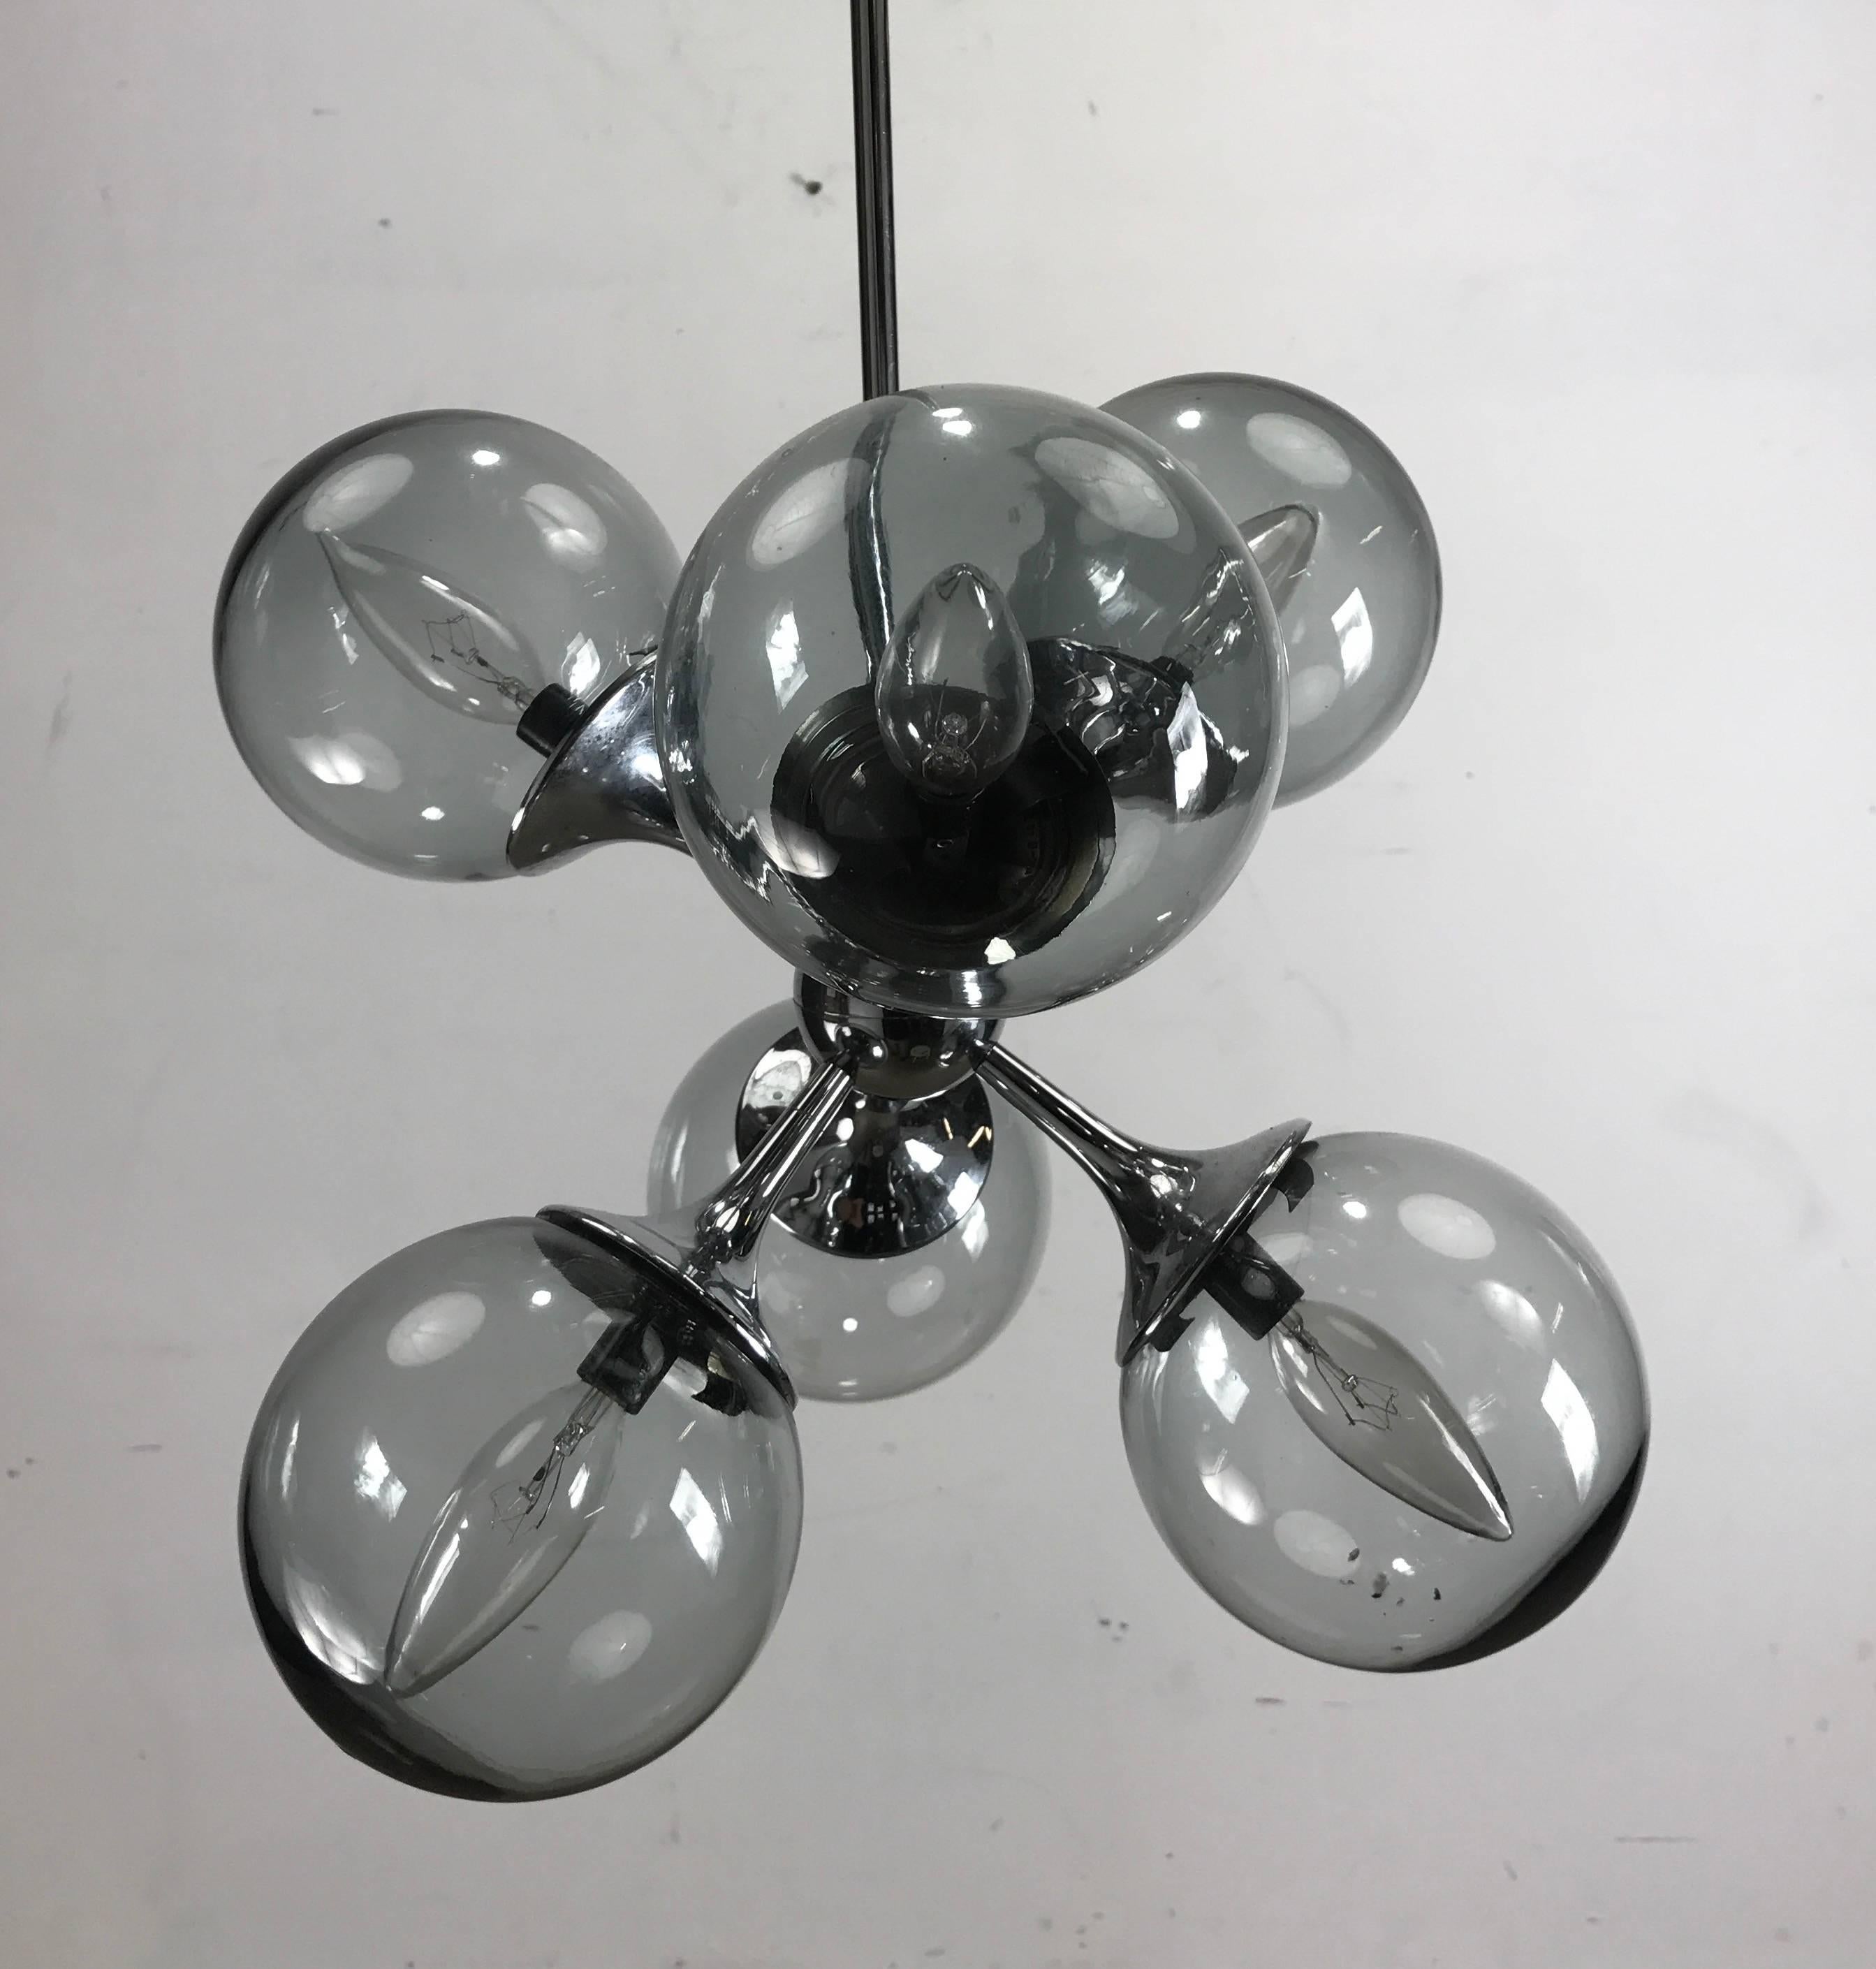 American Classic Lightolier Sputnik Pendant Light Fixture, Smoke Glass Globes